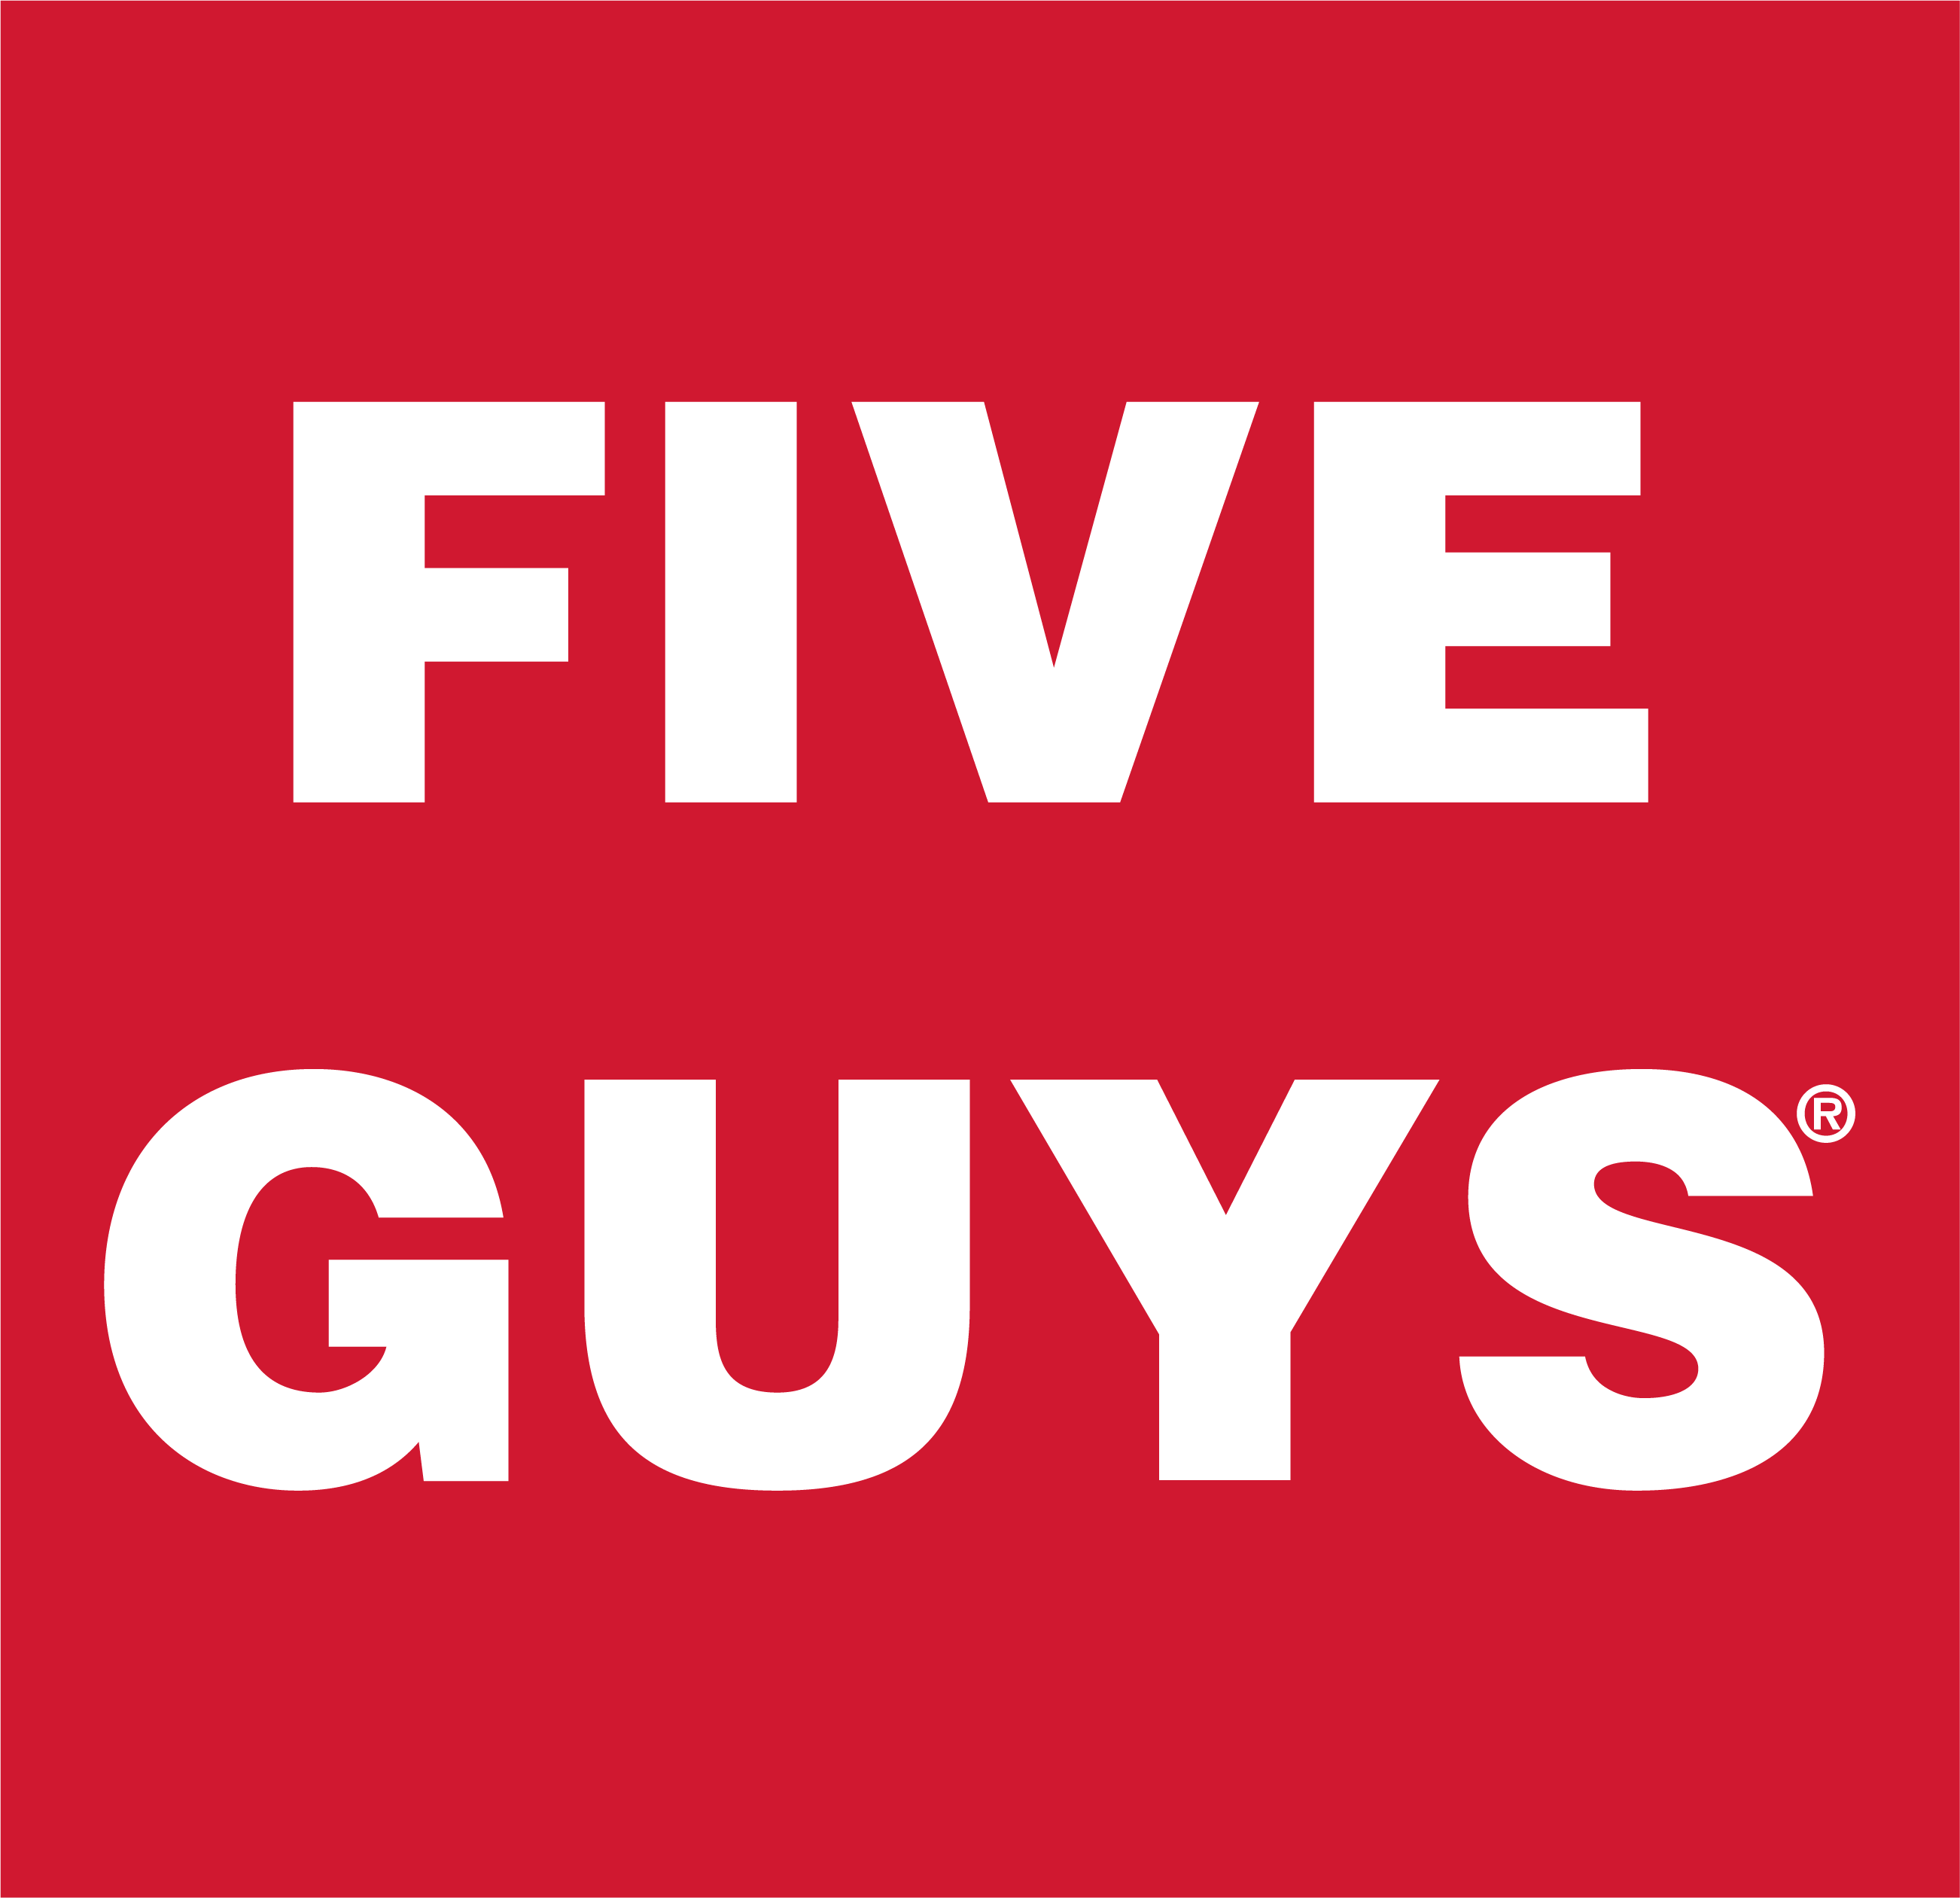 Brand logo for Five Guys